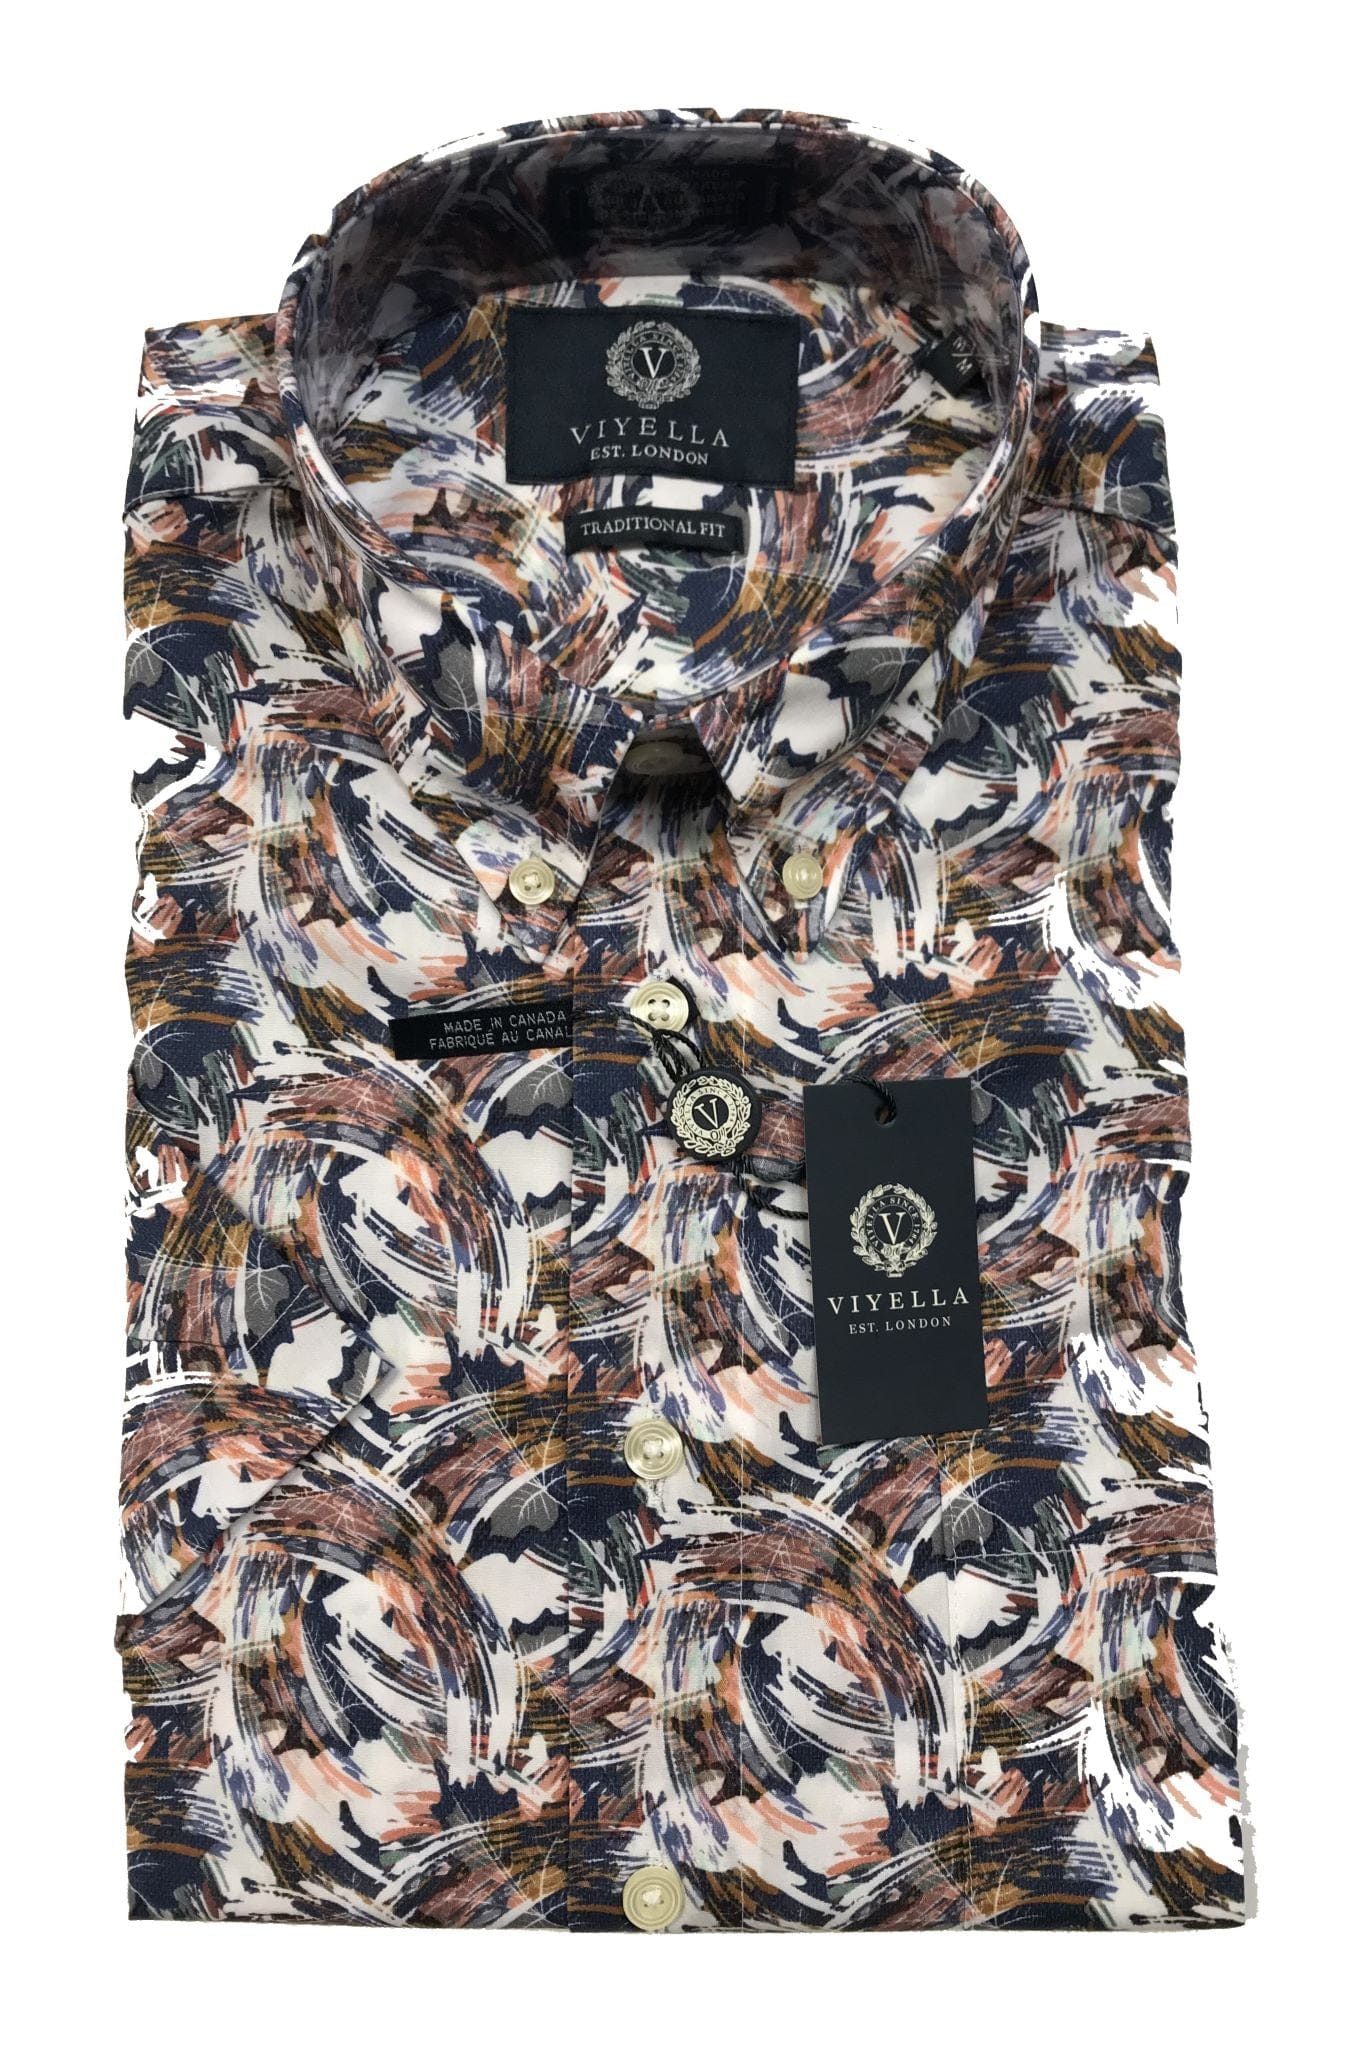 Viyella Short Sleeve Shirts - Multi Color Modern Print